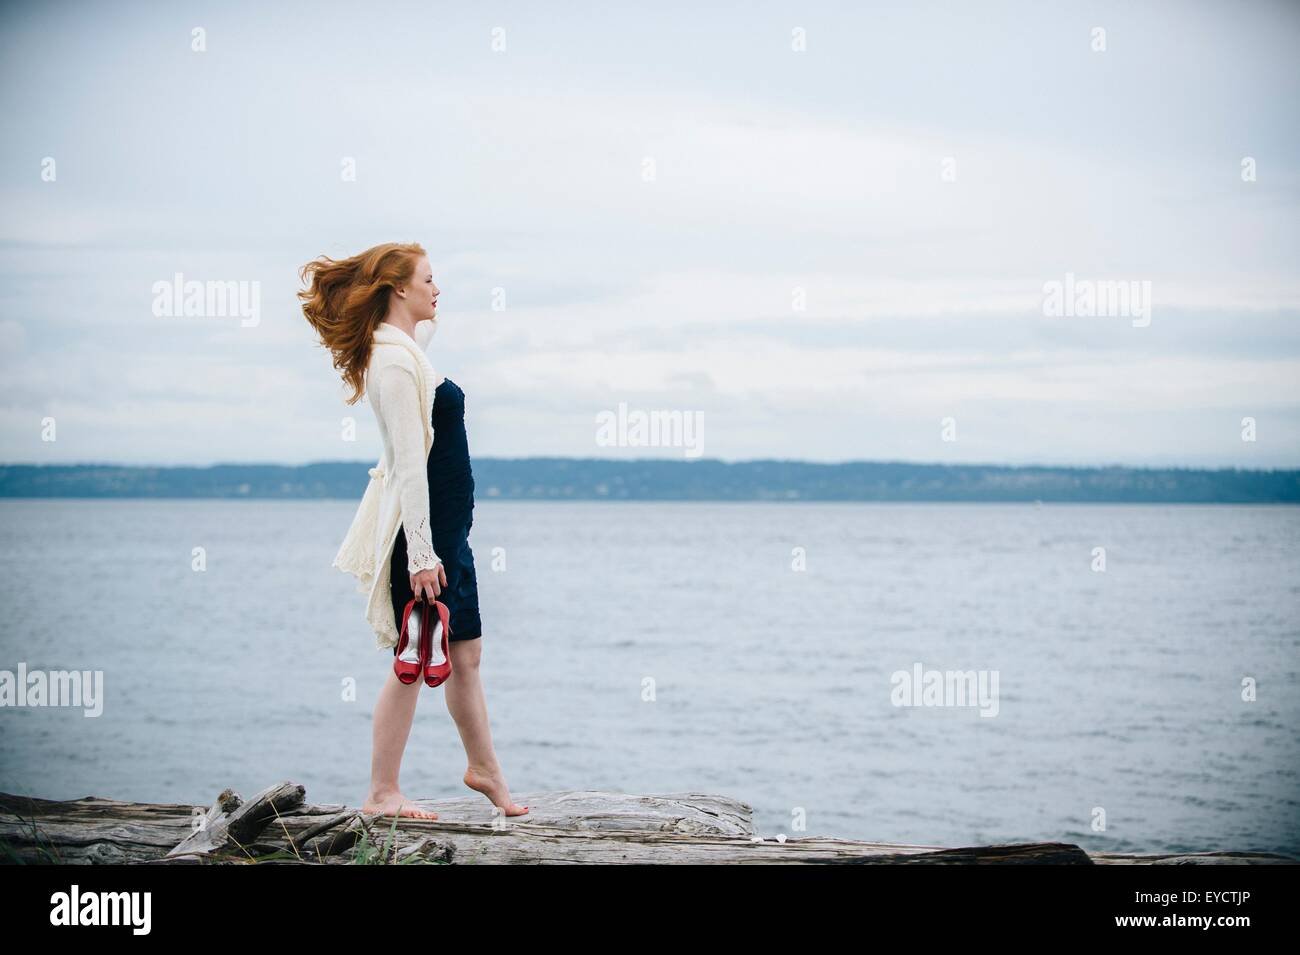 Young woman on beach looking out to sea, Bainbridge Island, Washington State, USA Stock Photo